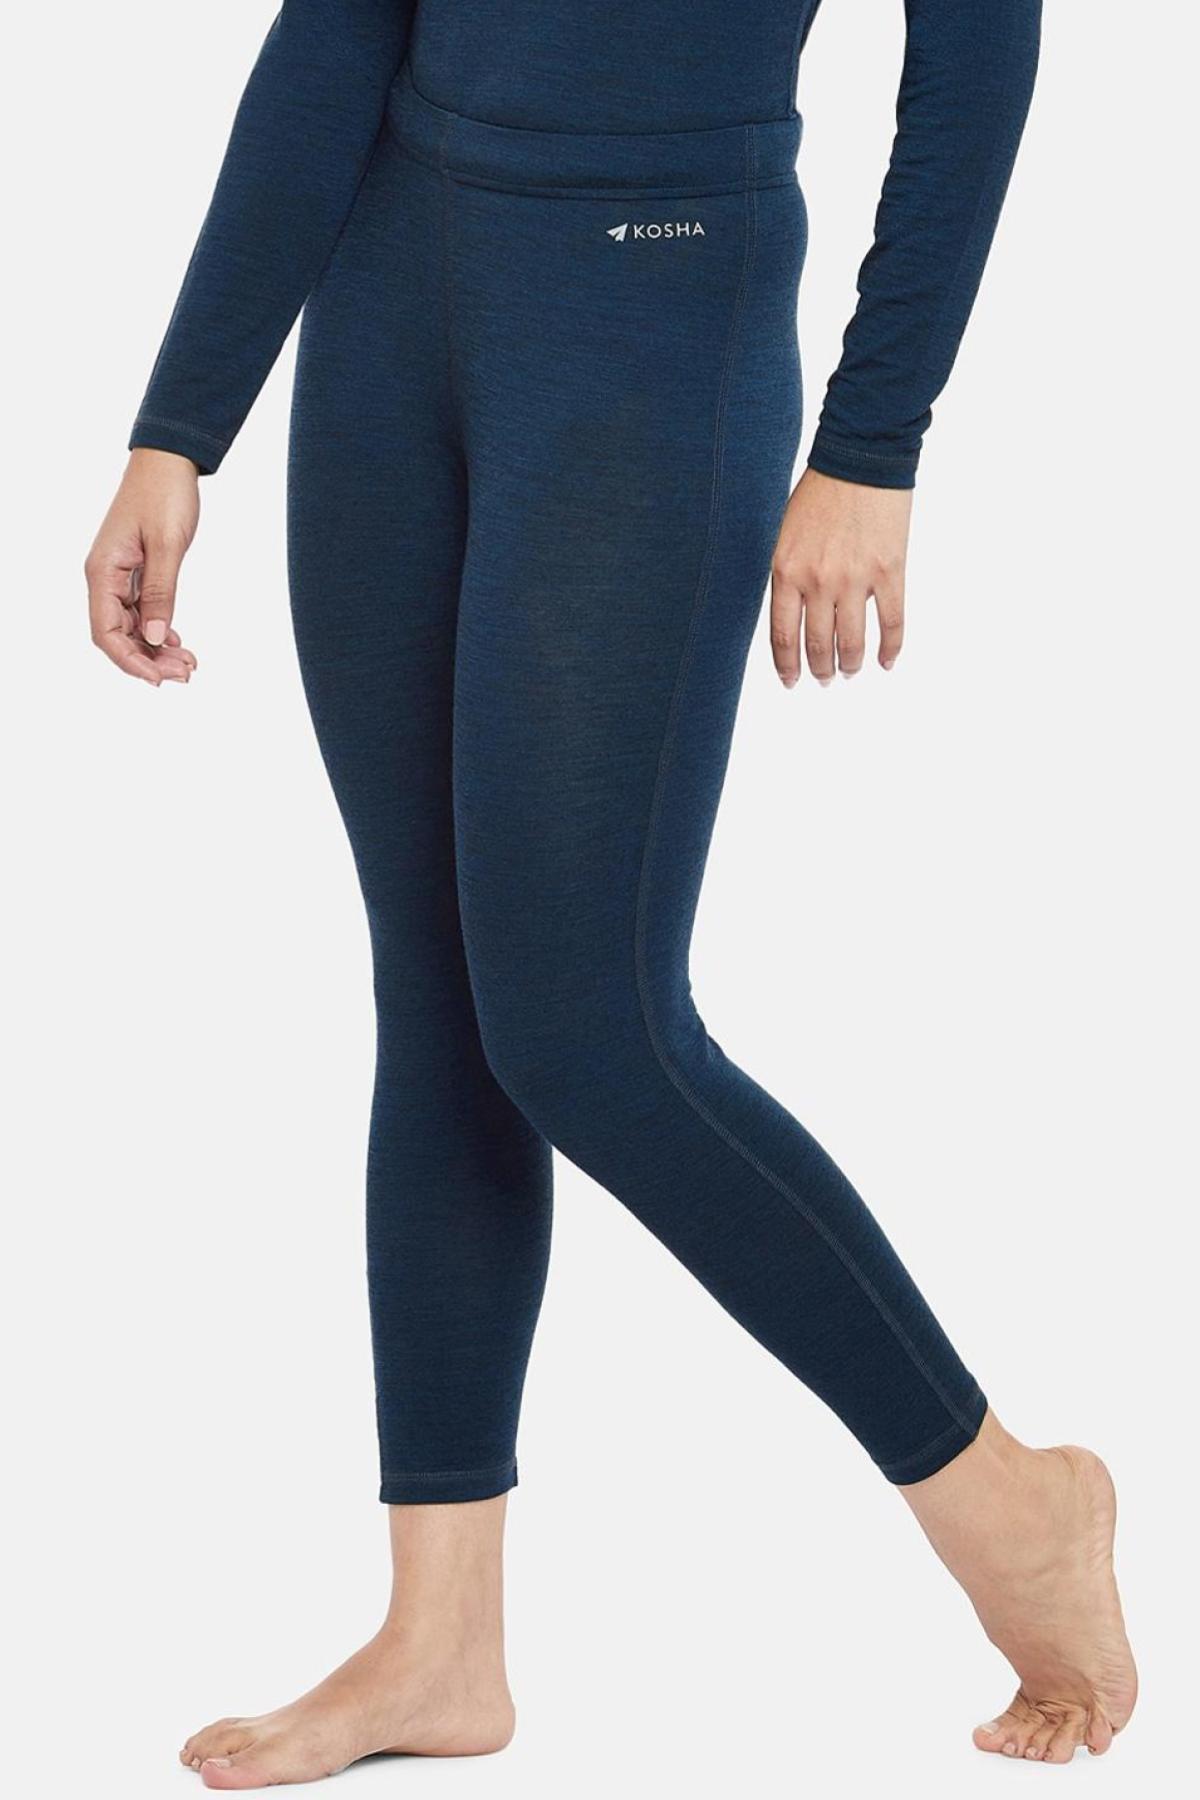 Sin La Blue Merino Wool Bamboo Thermal Leggings | Women | Snuggle Up With Free Woollen Socks